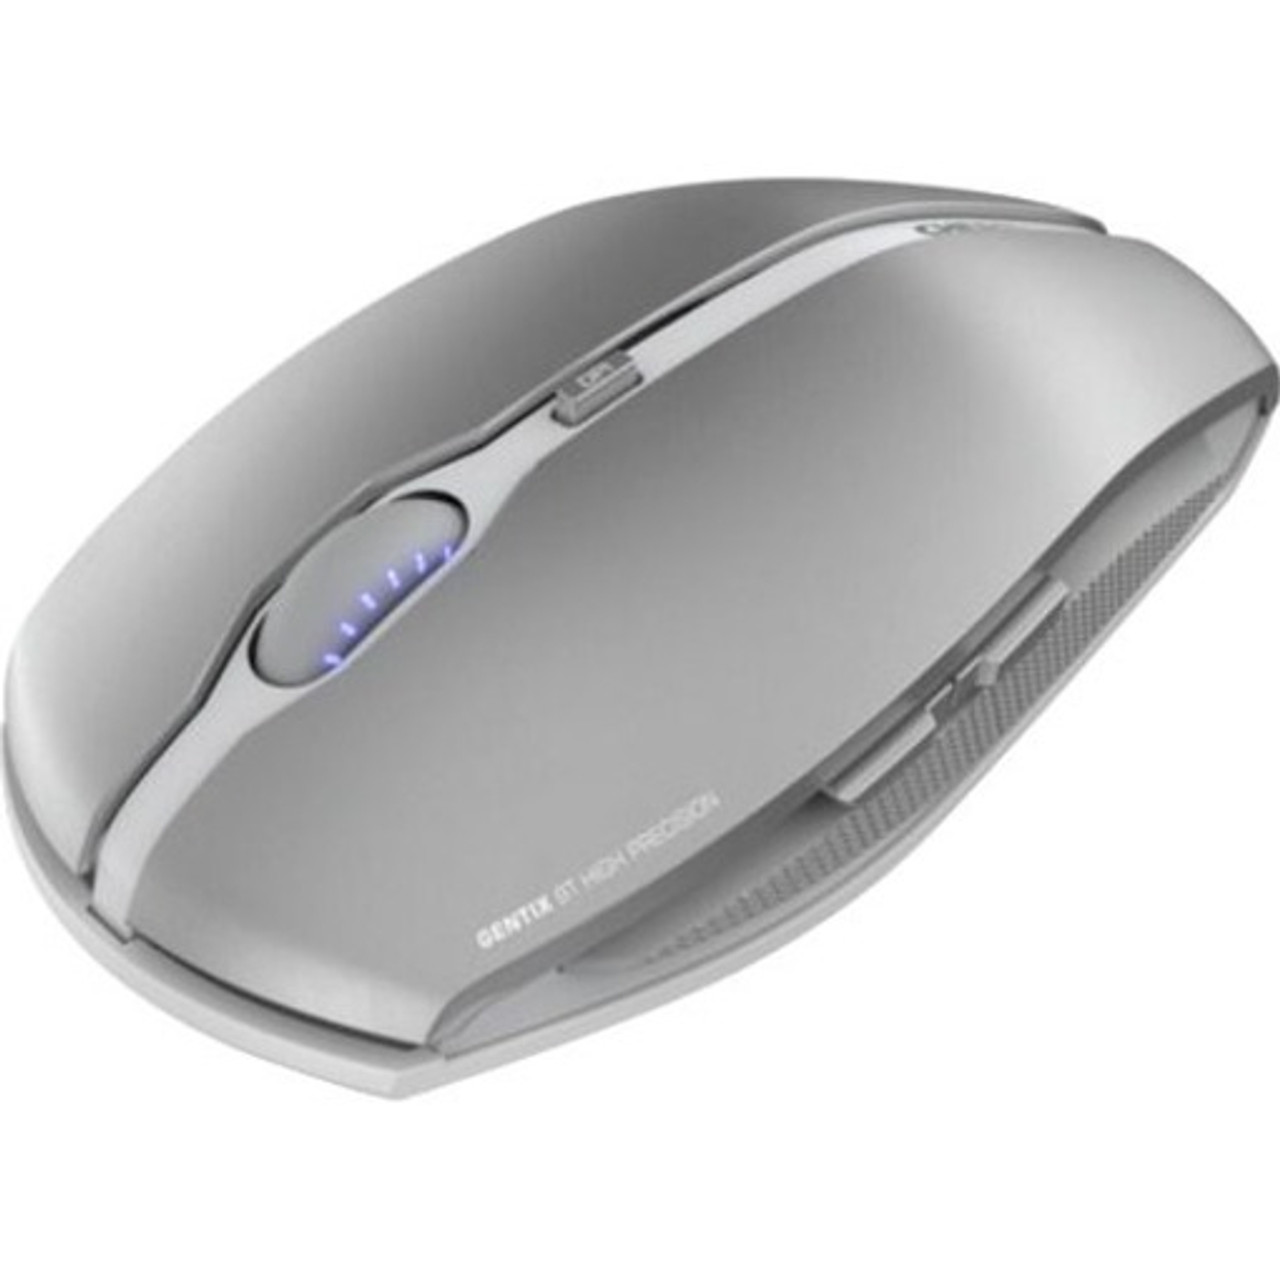 CHERRY GENTIX BT Bluetooth Mouse - JW-7500US-20